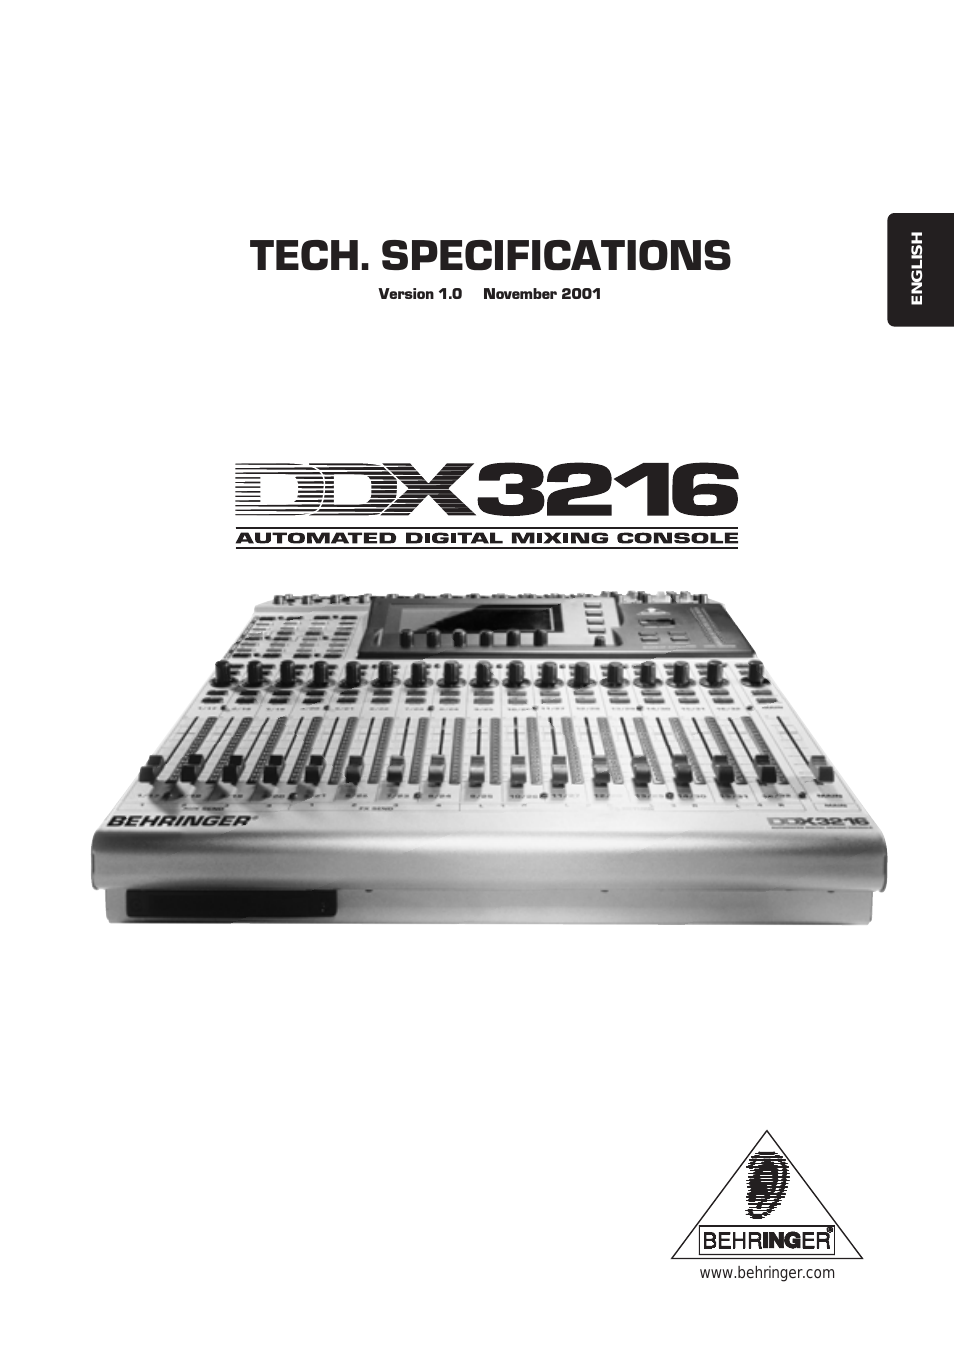 digital mixing console ddx3216